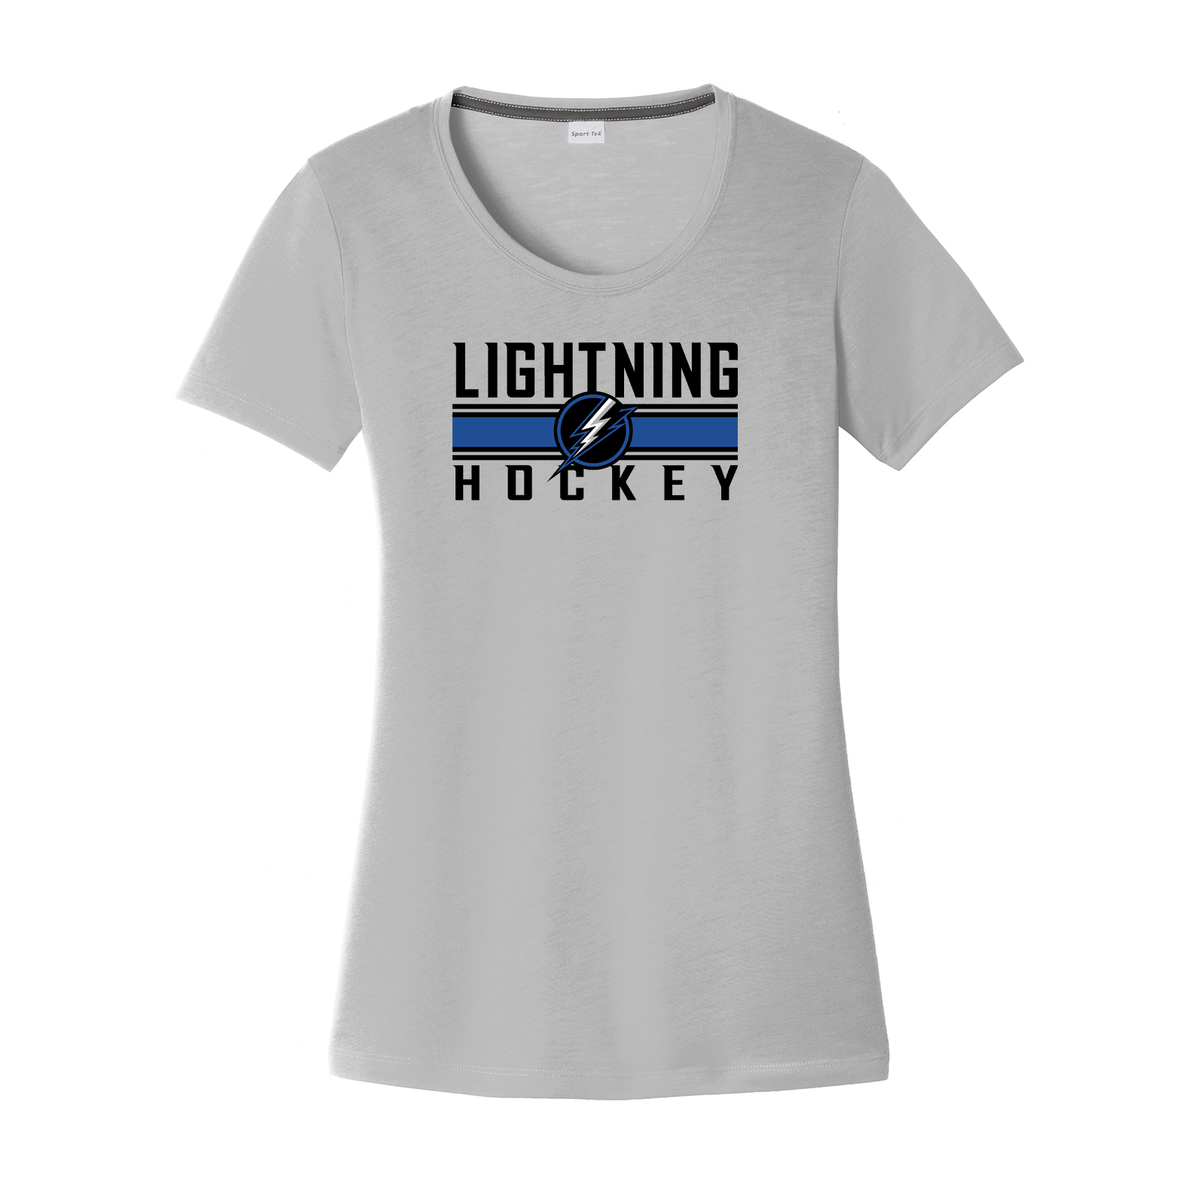 Long Island Lightning Hockey Women's CottonTouch Performance T-Shirt